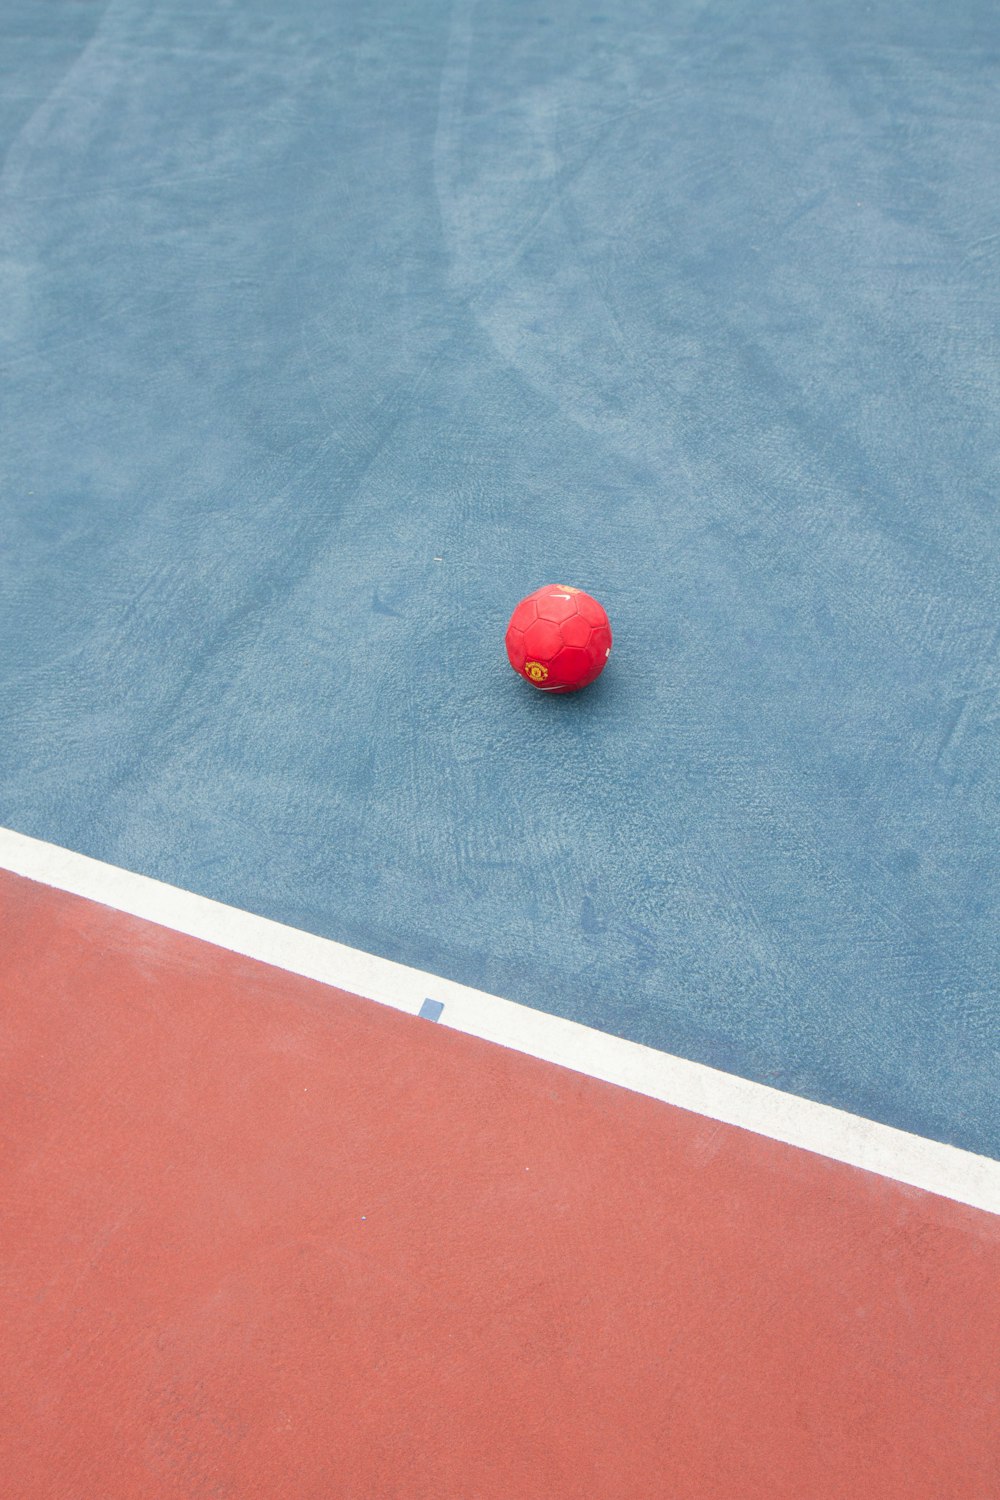 a red ball on a blue tennis court